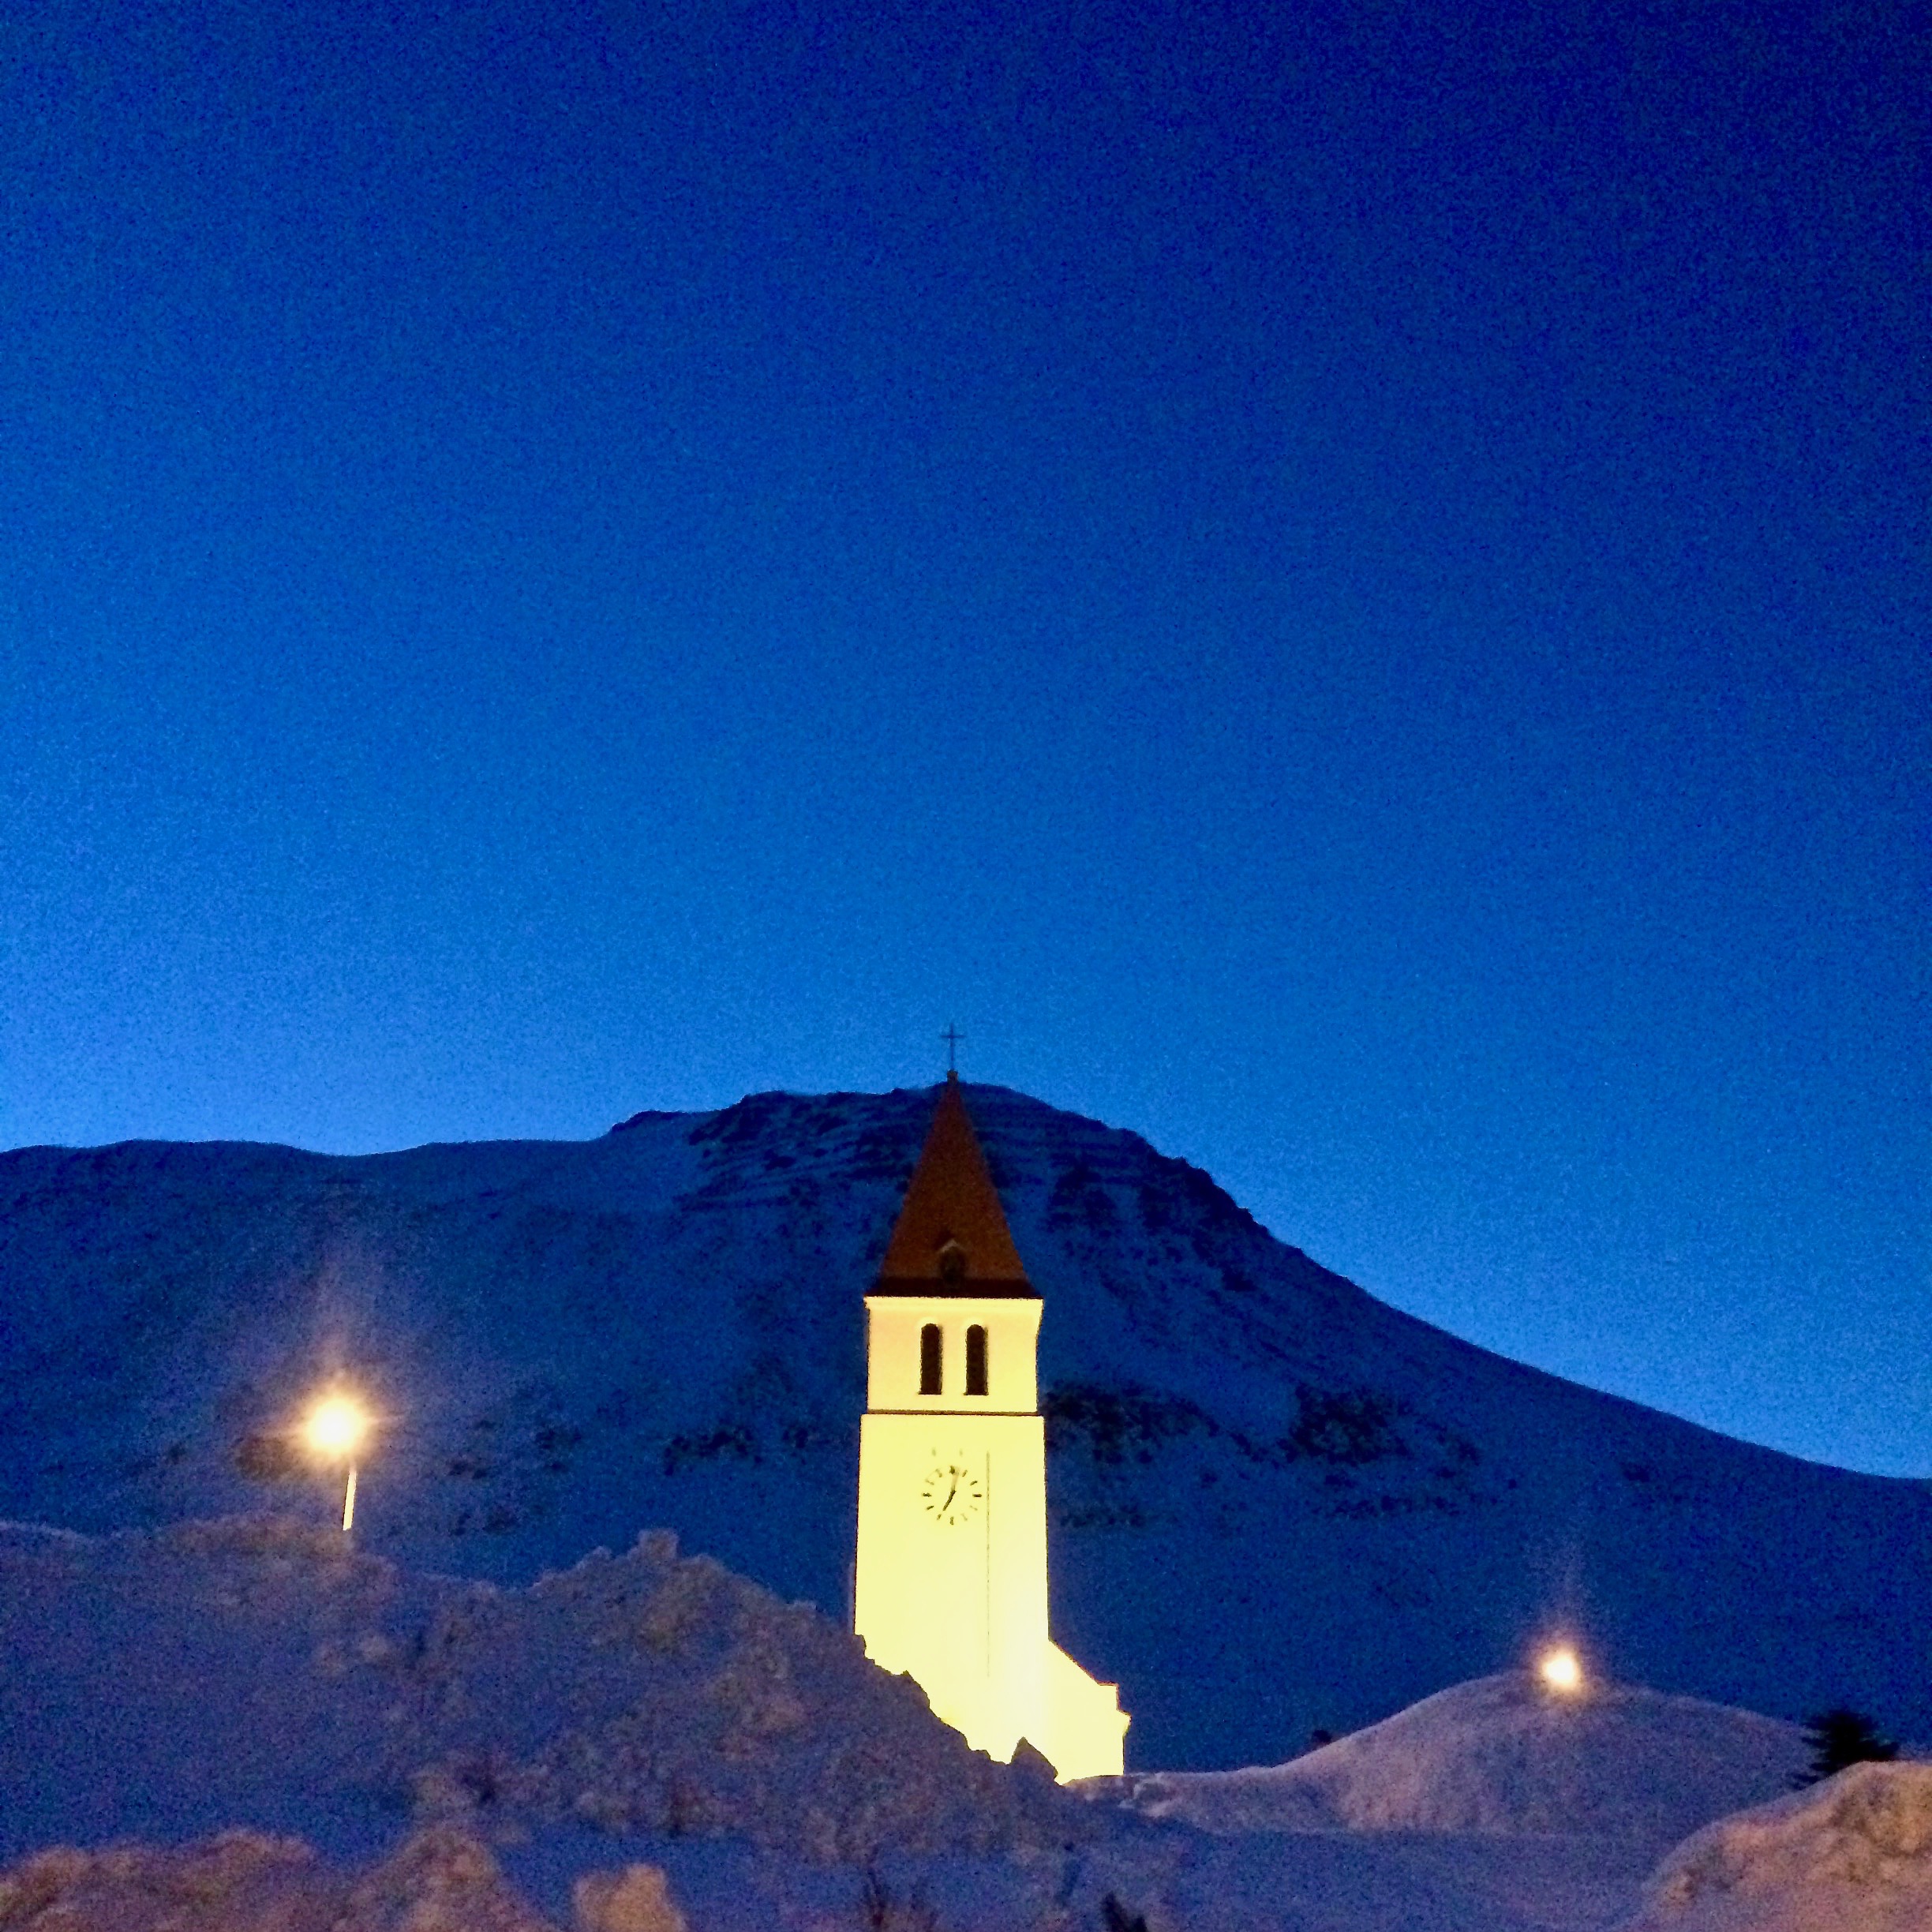 Tower in the town of Siglufjörður